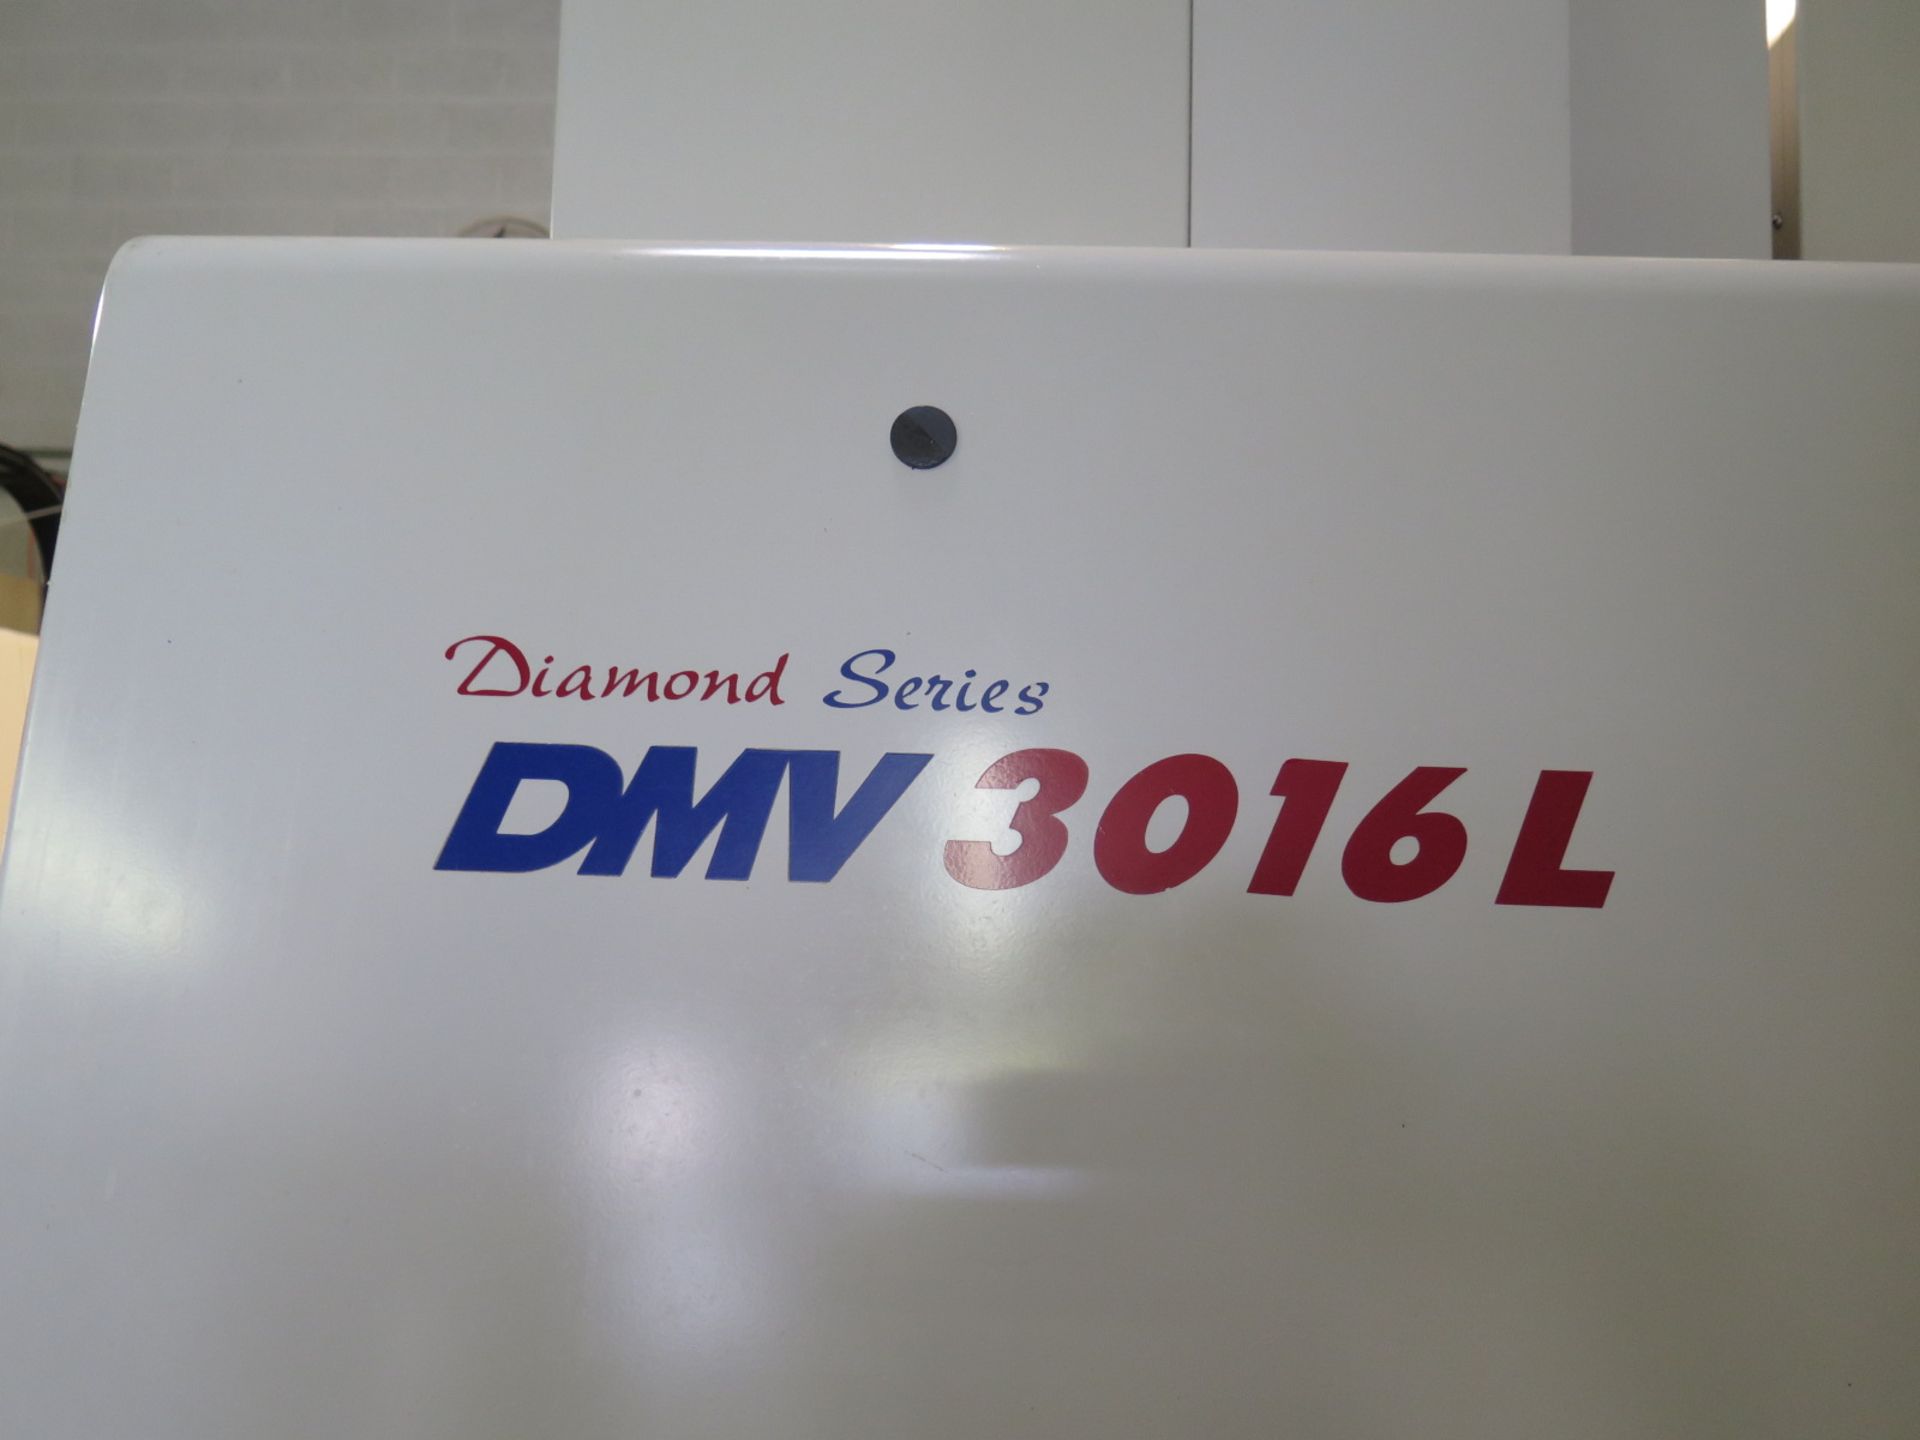 2005 Daewoo Diamond Series DMV3016L CNC Vertical Machining Center s/n NM4100055 w/ Daewoo-Fanuc i- - Image 7 of 8